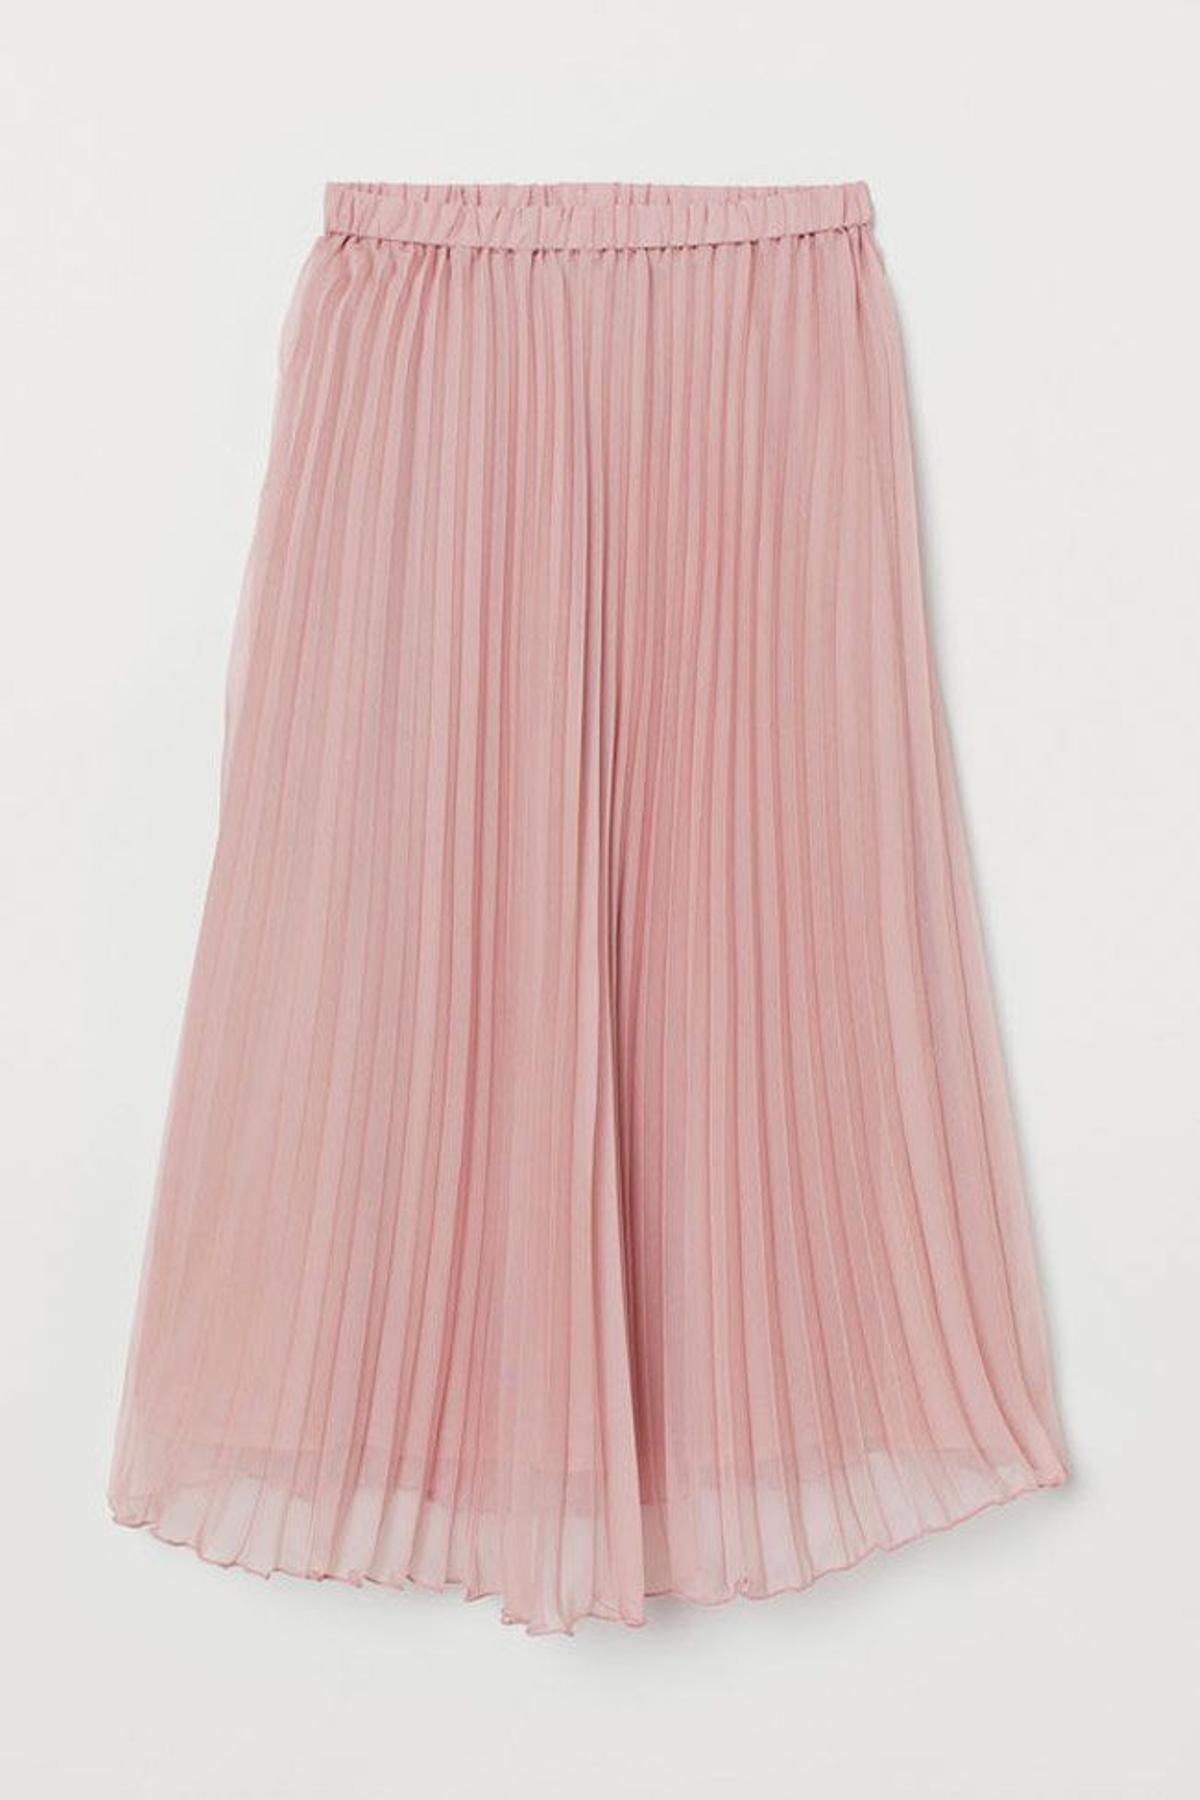 Falda plisada de bailarina semitransparente, de H&amp;M